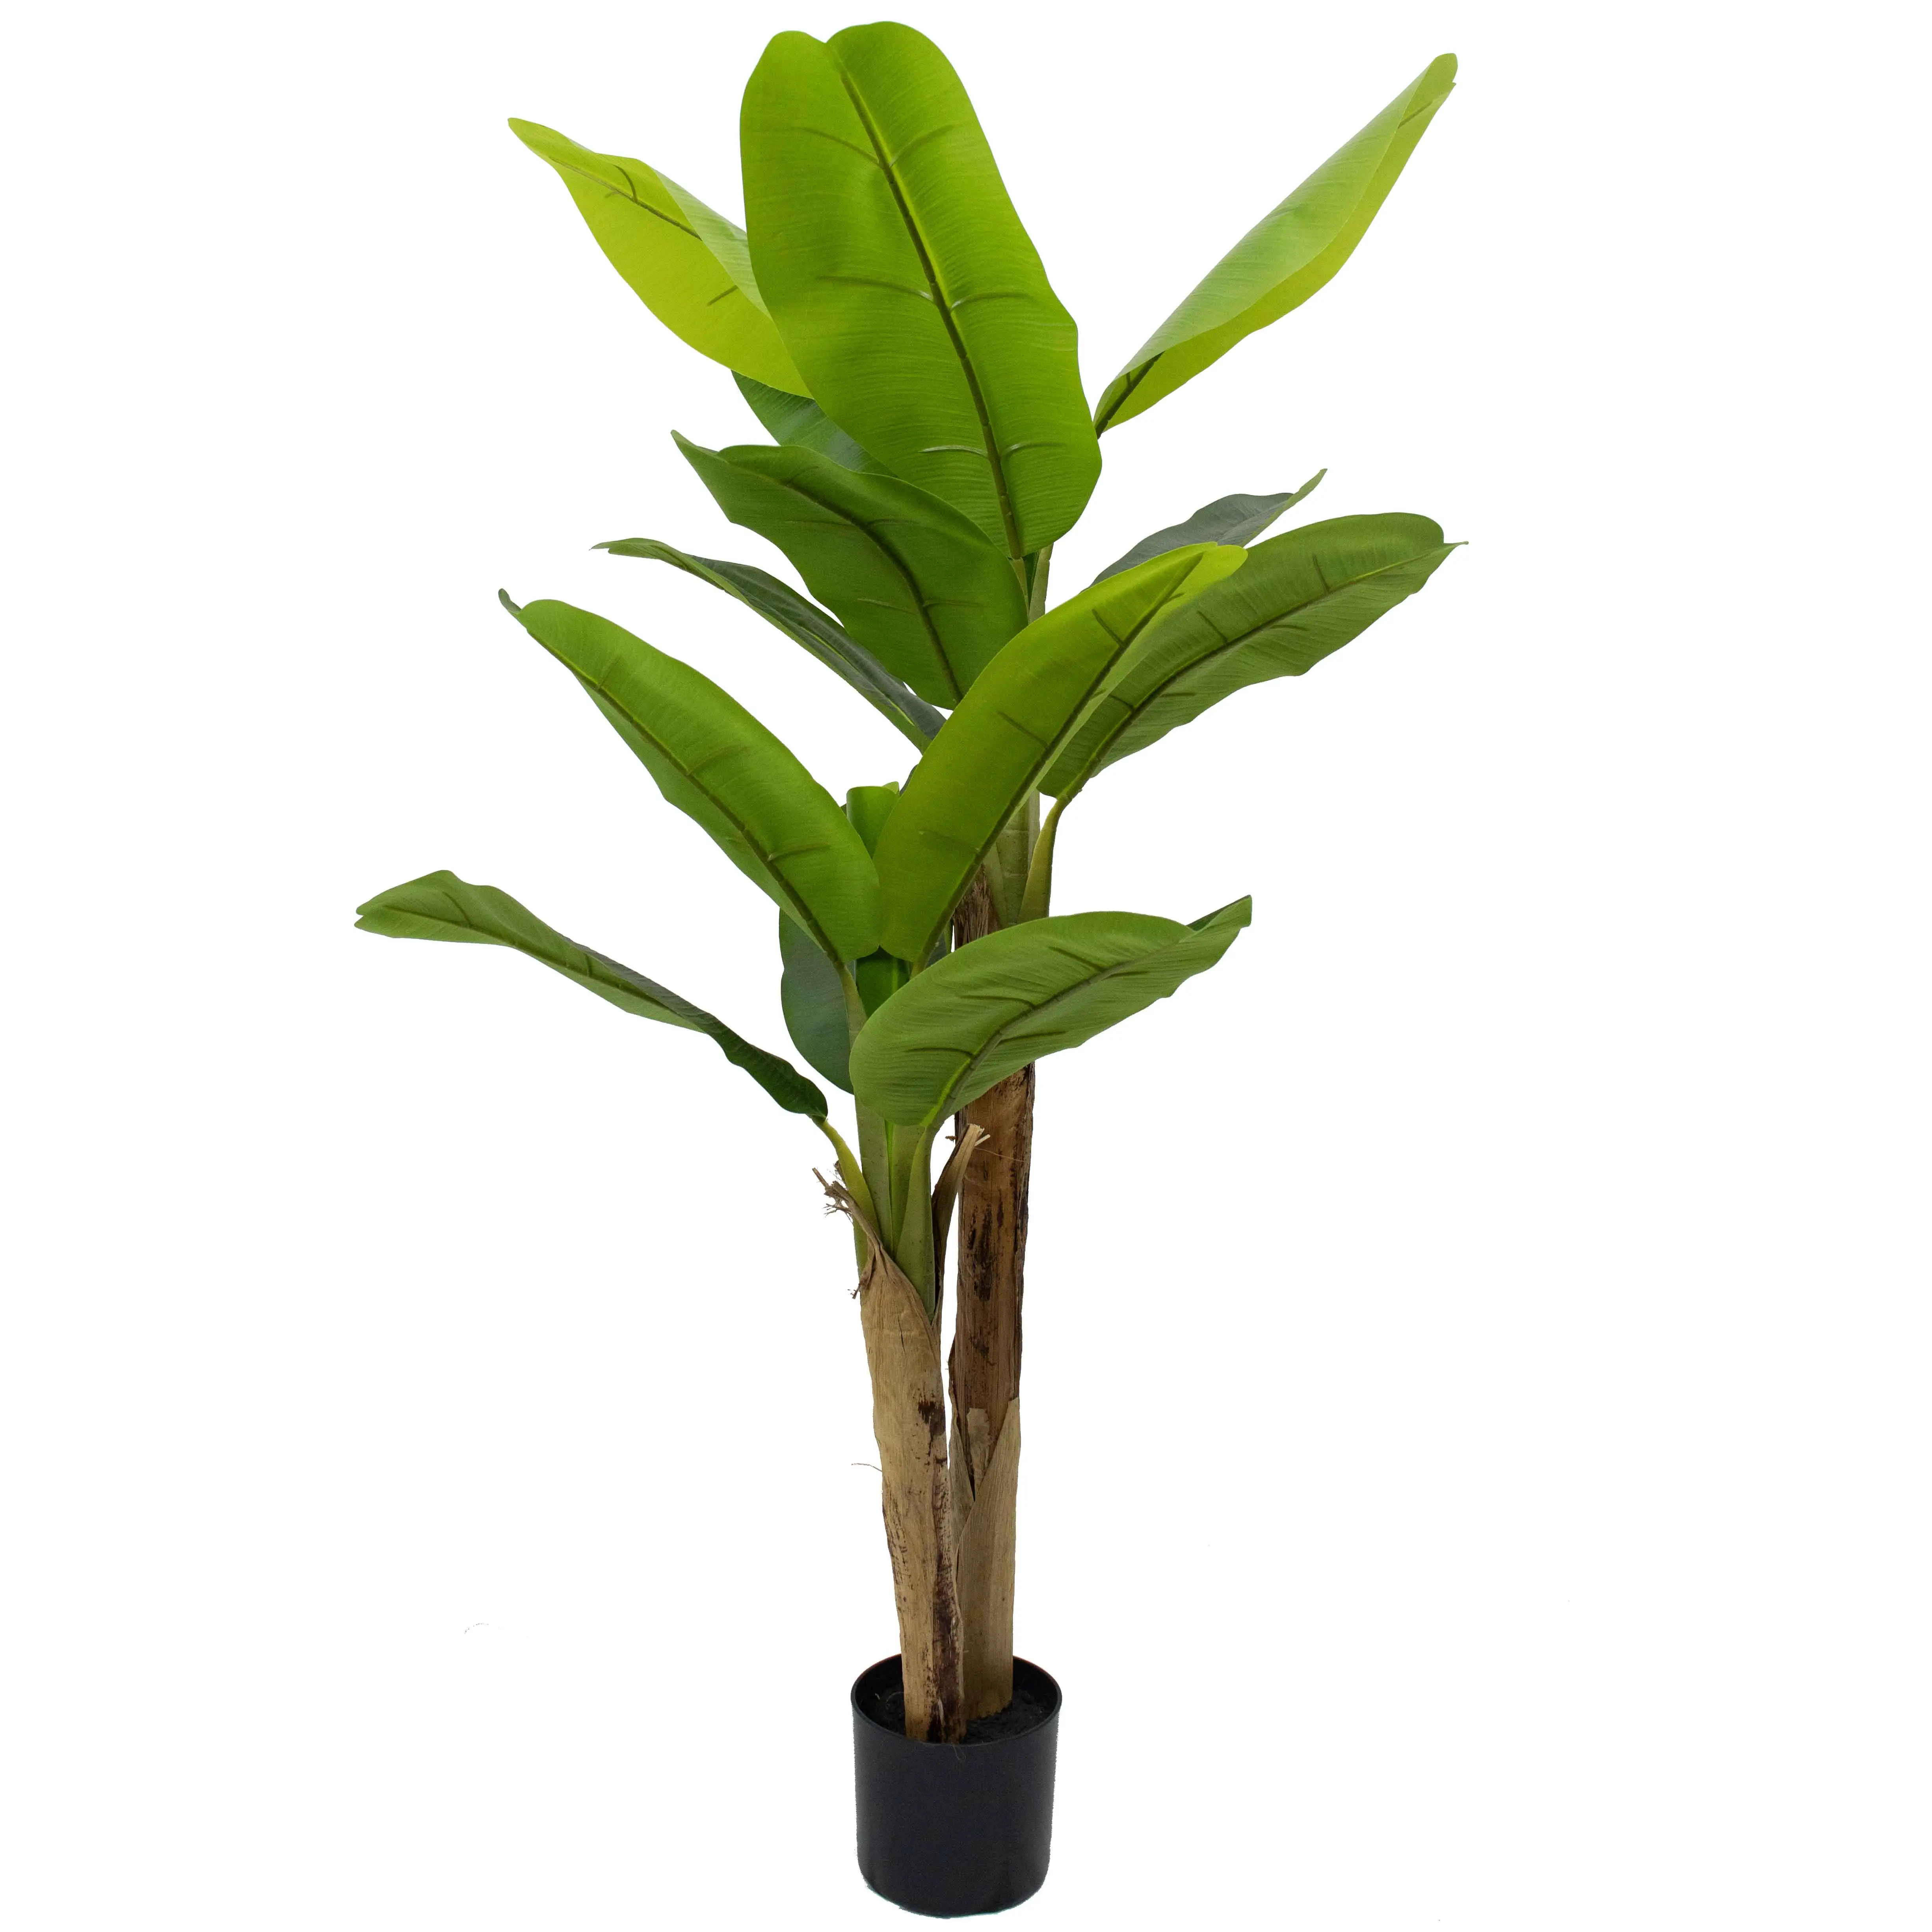 150cmシミュレートされたプラスチック15枚の葉植物無臭の装飾用の庭の装飾リアルな人工オオバコMusabasjooバナナの木